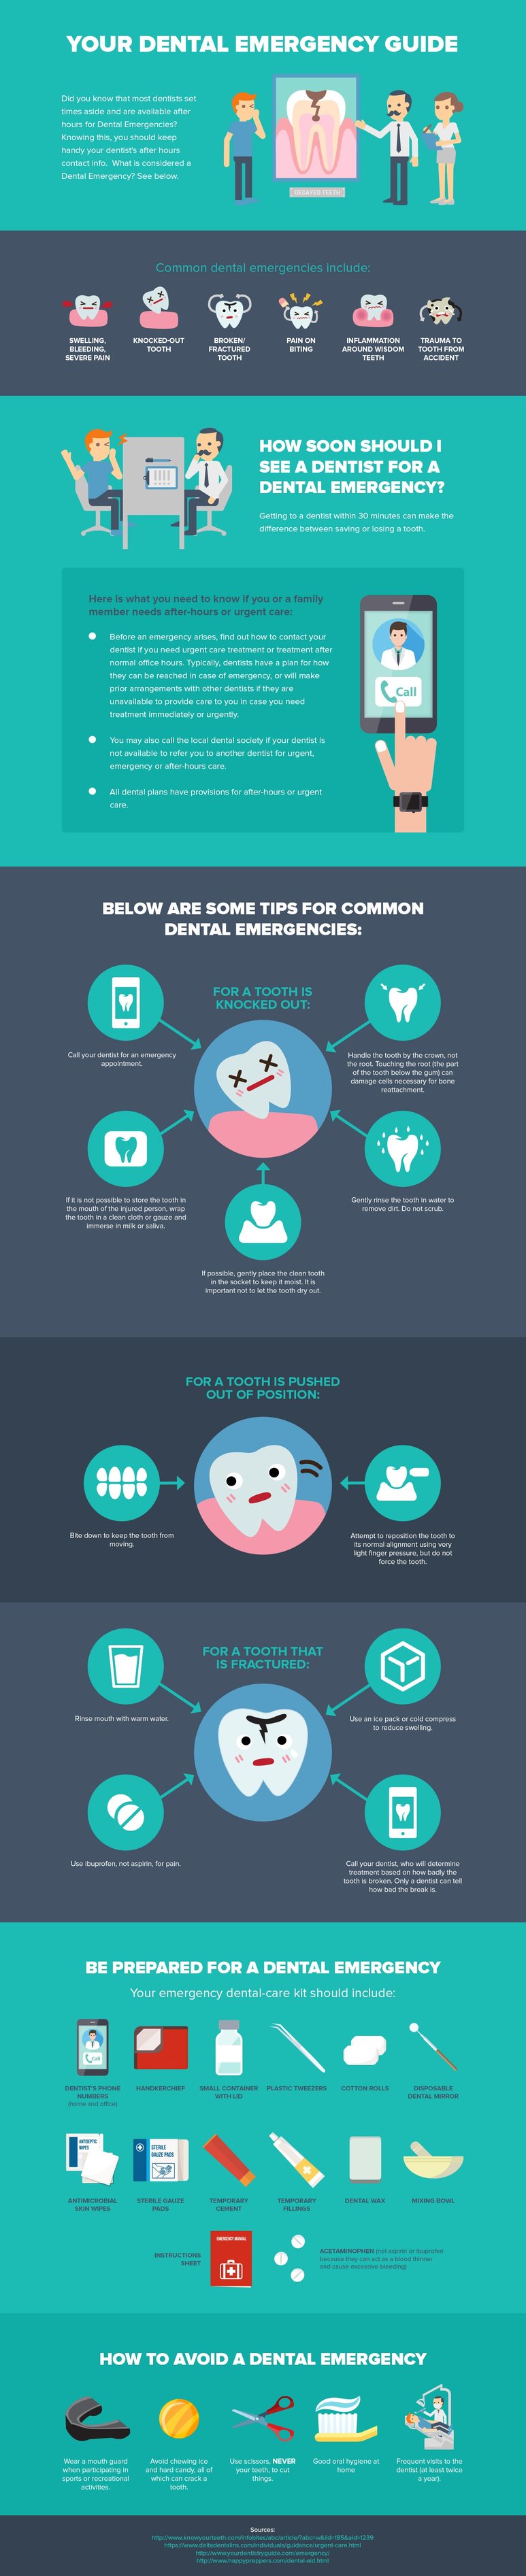 Dental Emergency infographic high resolution.jpg